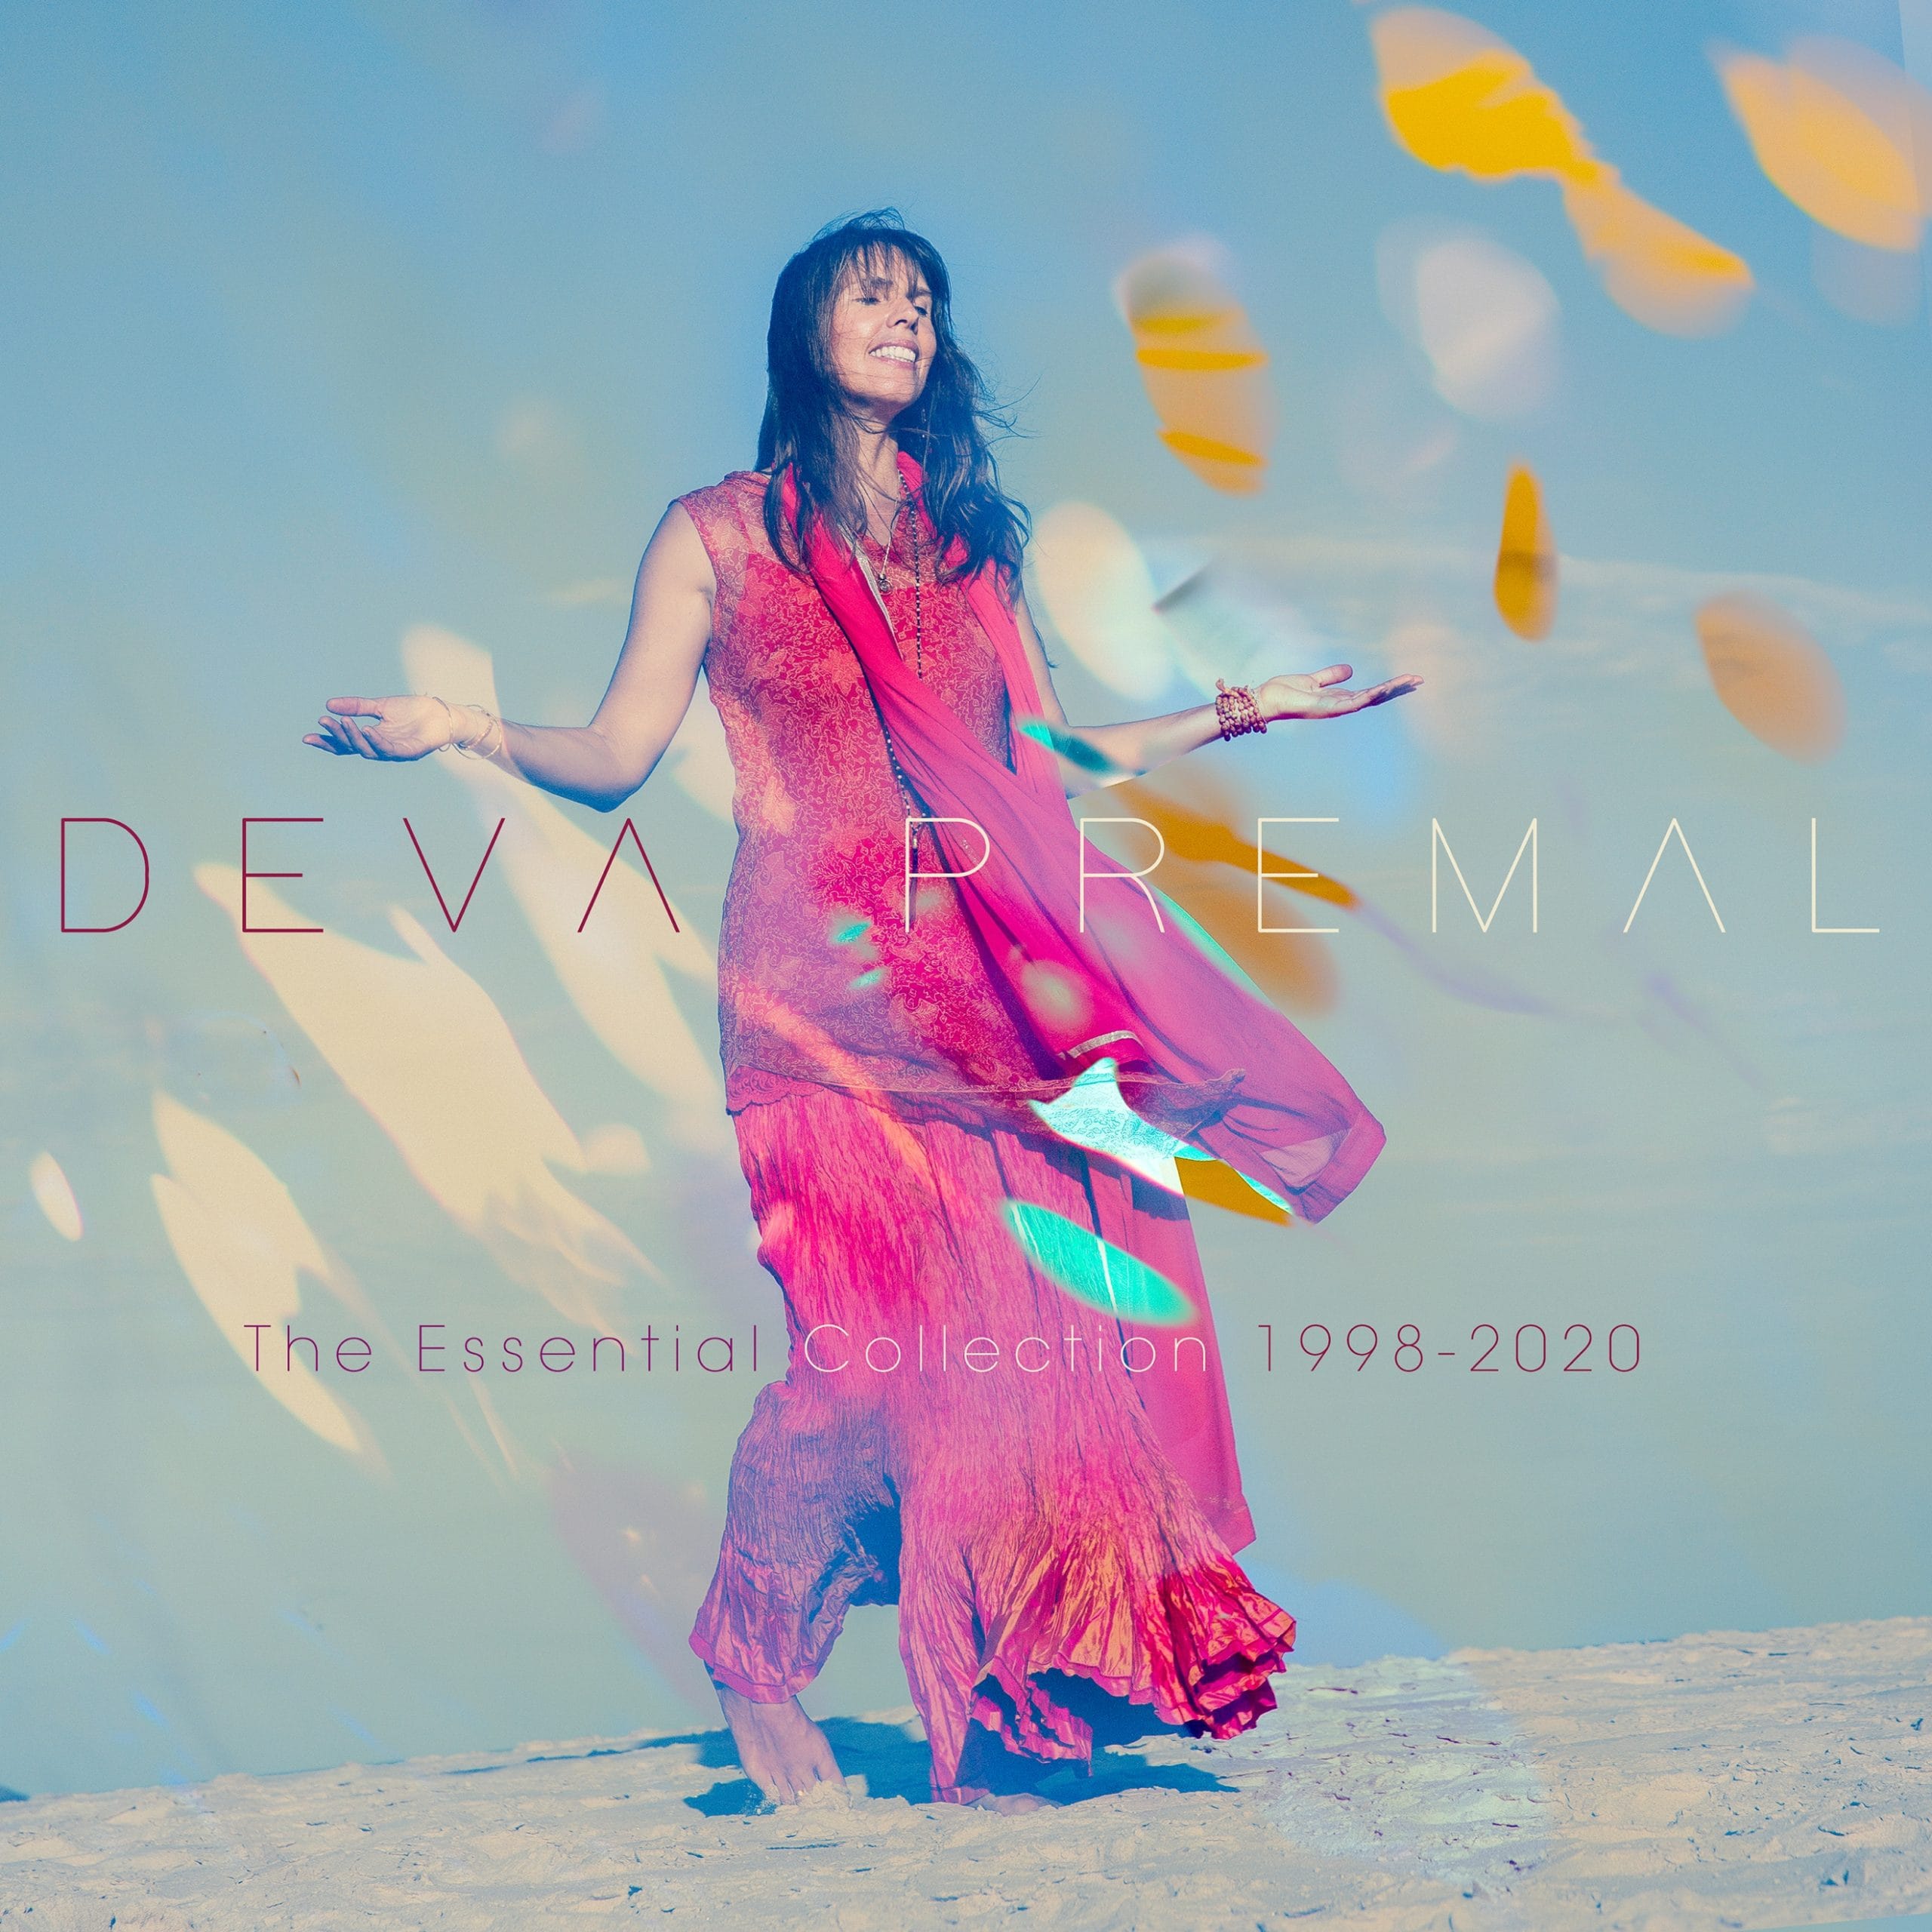 Deva Premal – the Essential Collection (1998 – 2020)